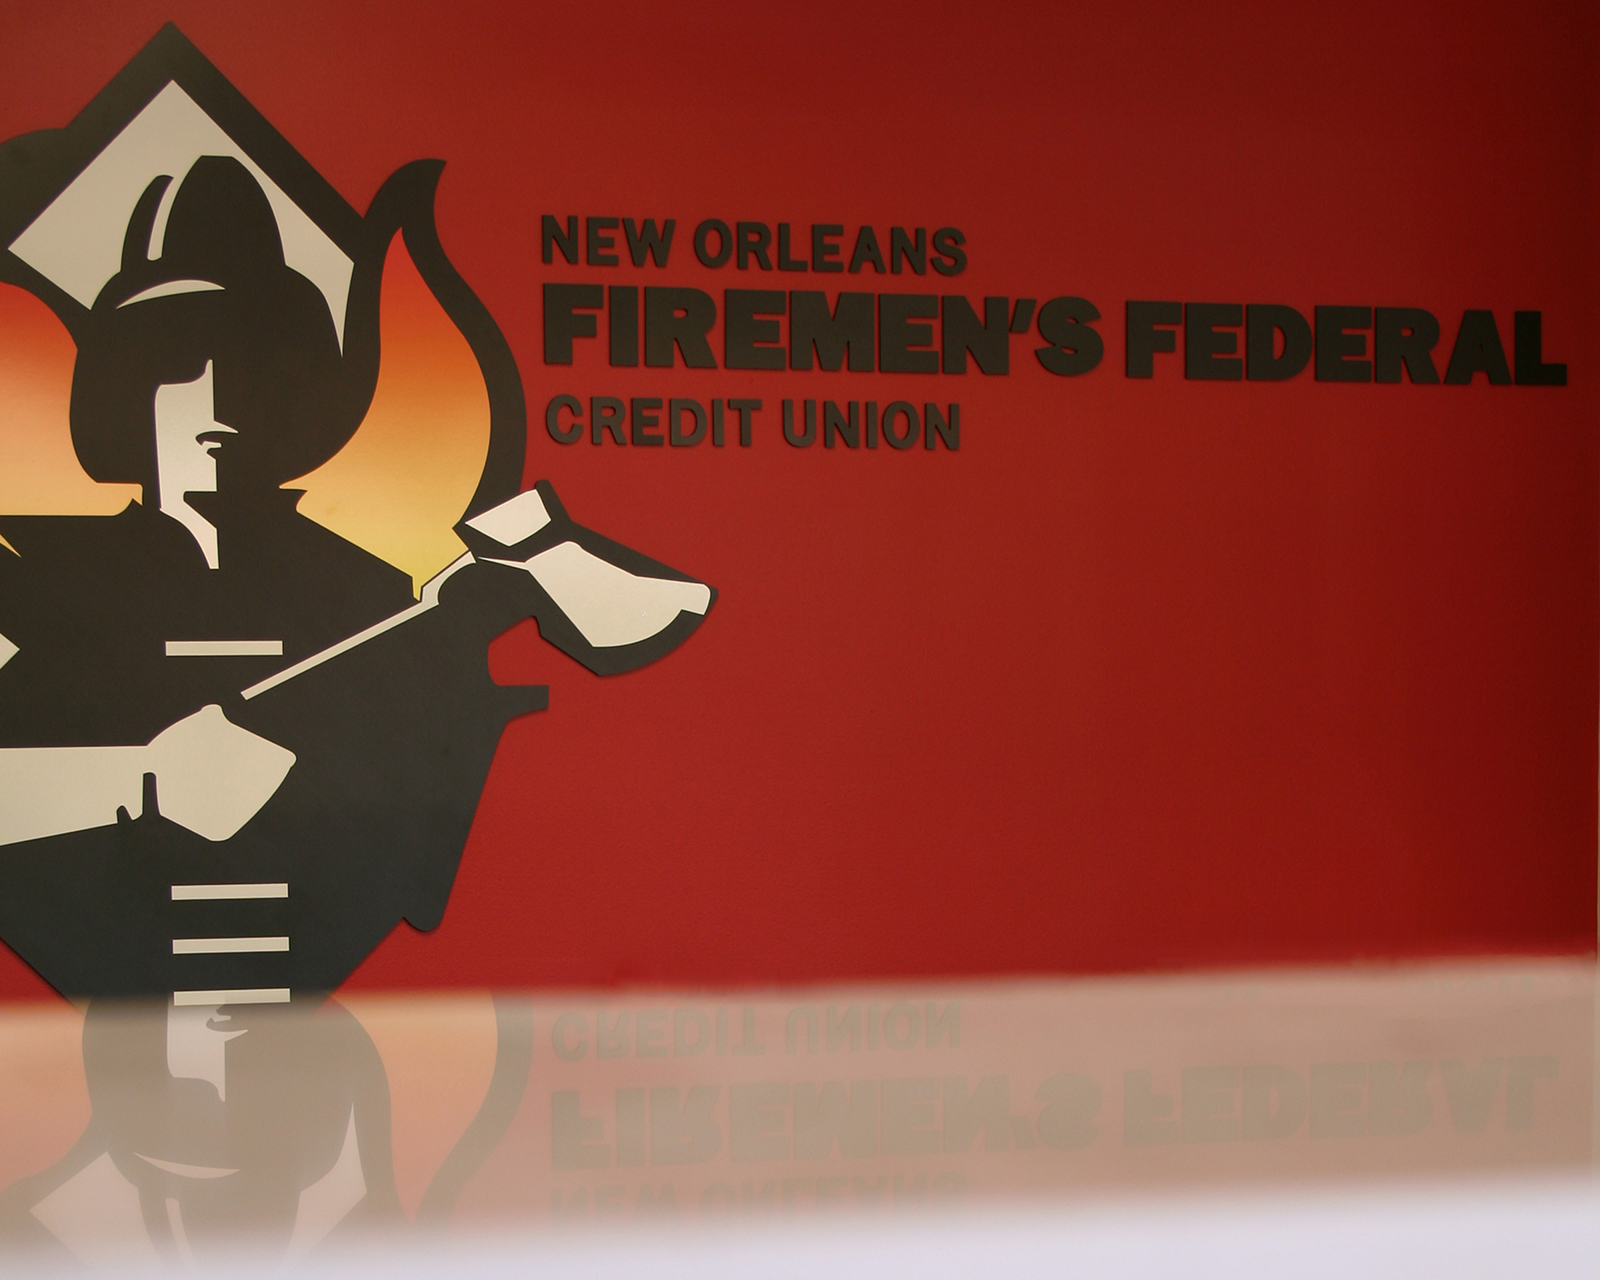 Firemen's Federal Credit Union